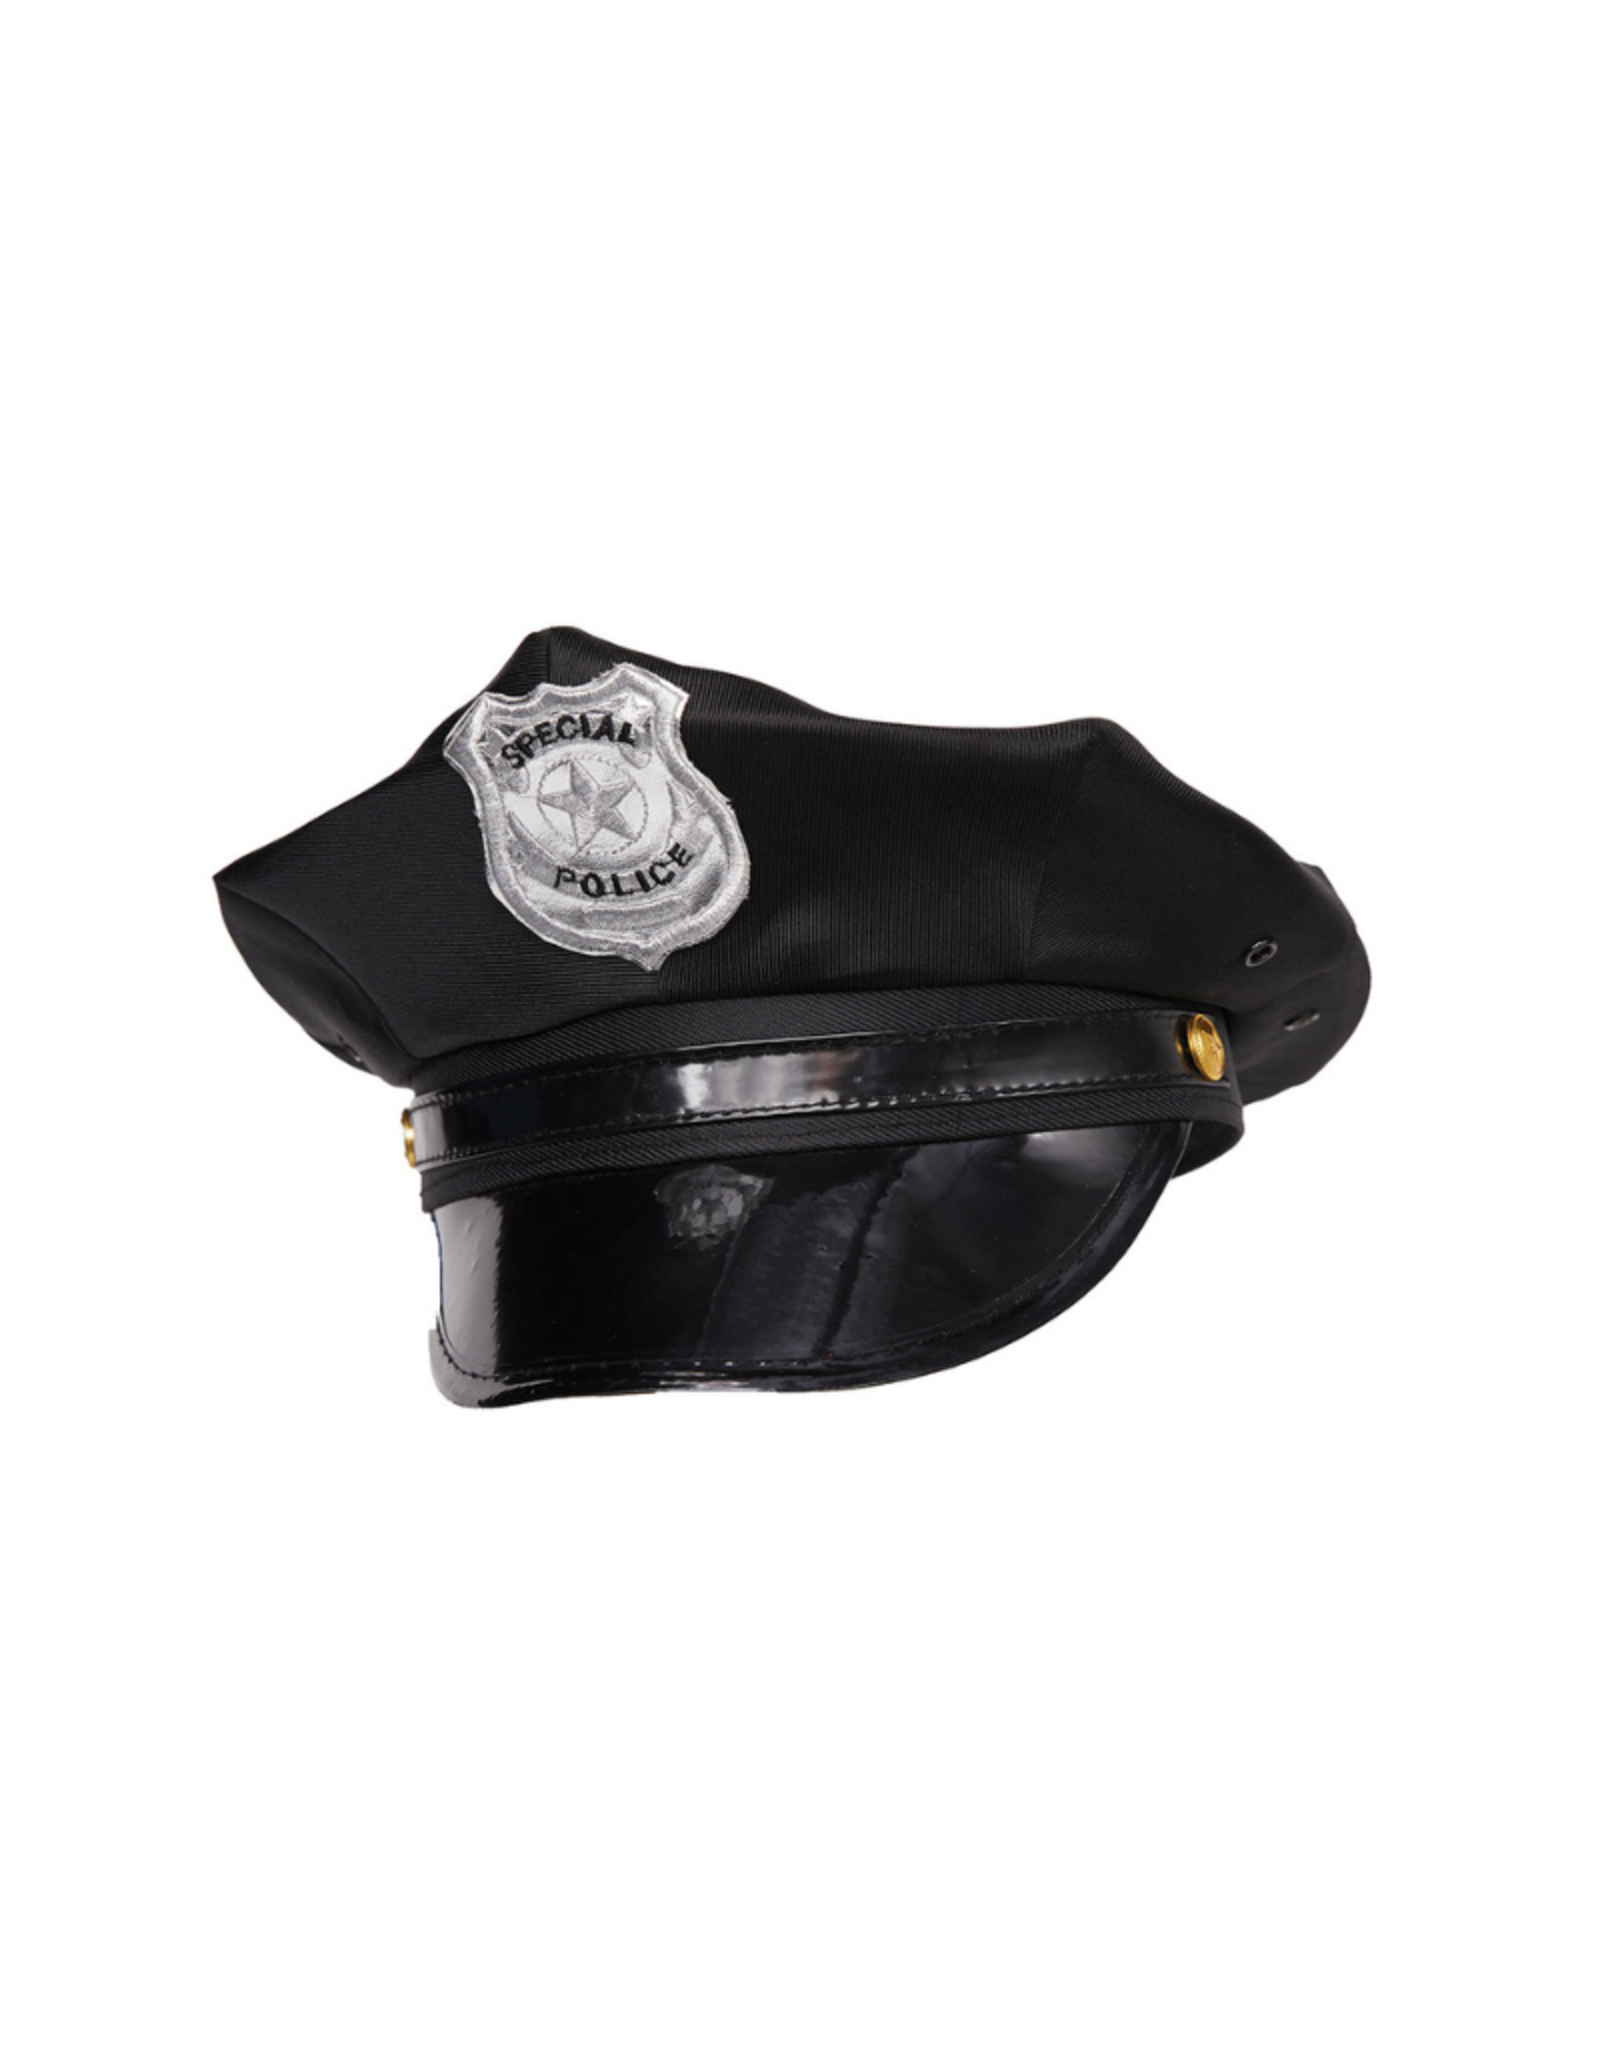 Underwraps HAT-POLICE W/BADGE